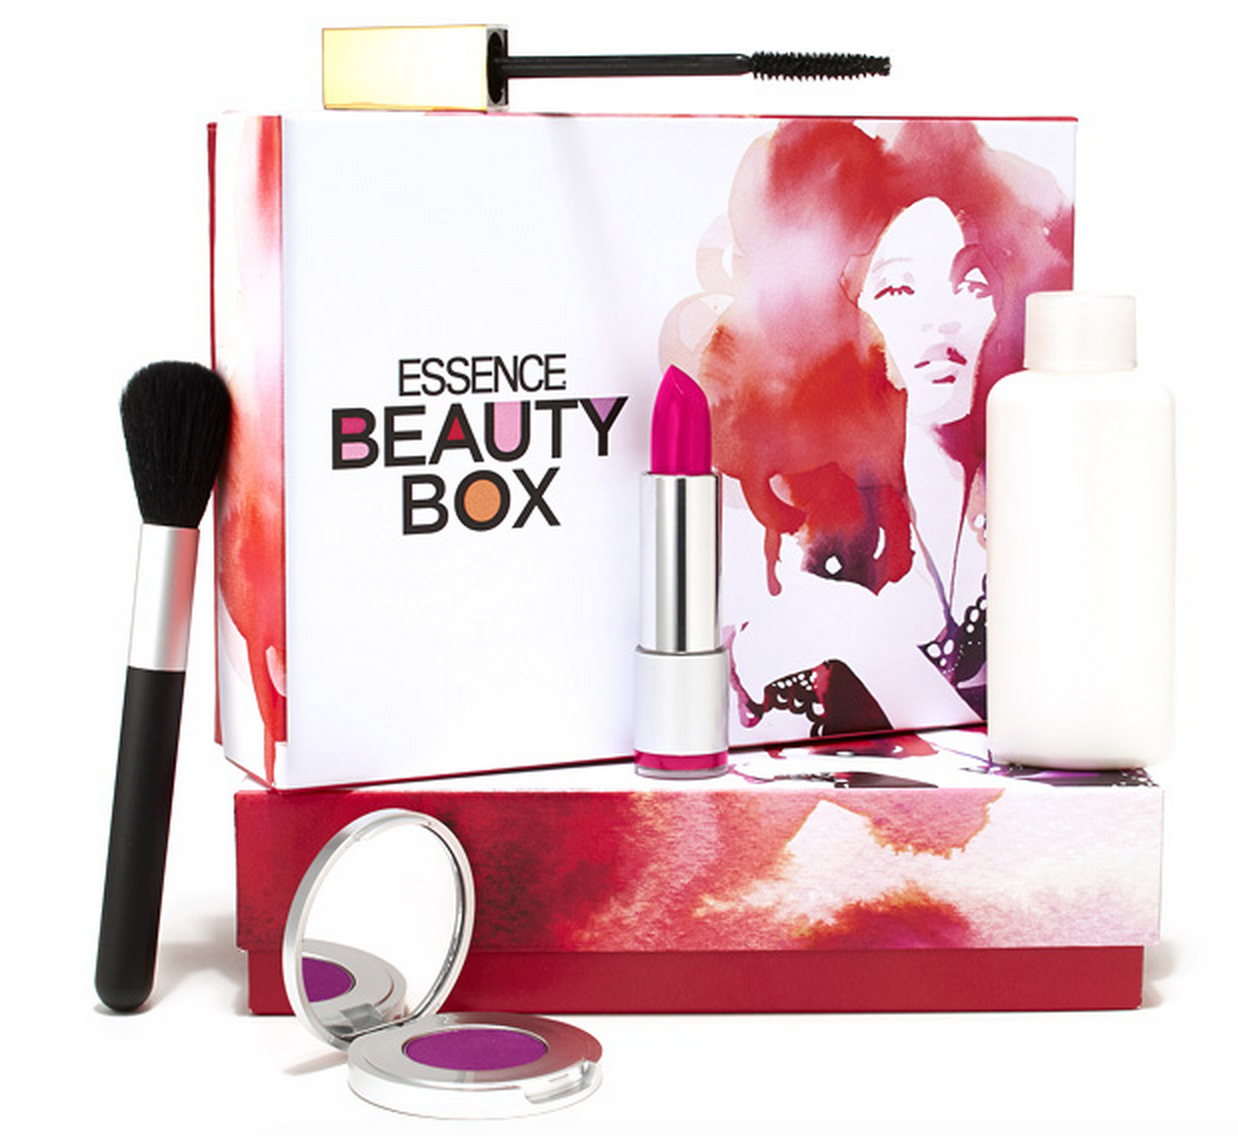 Essence Beauty Box